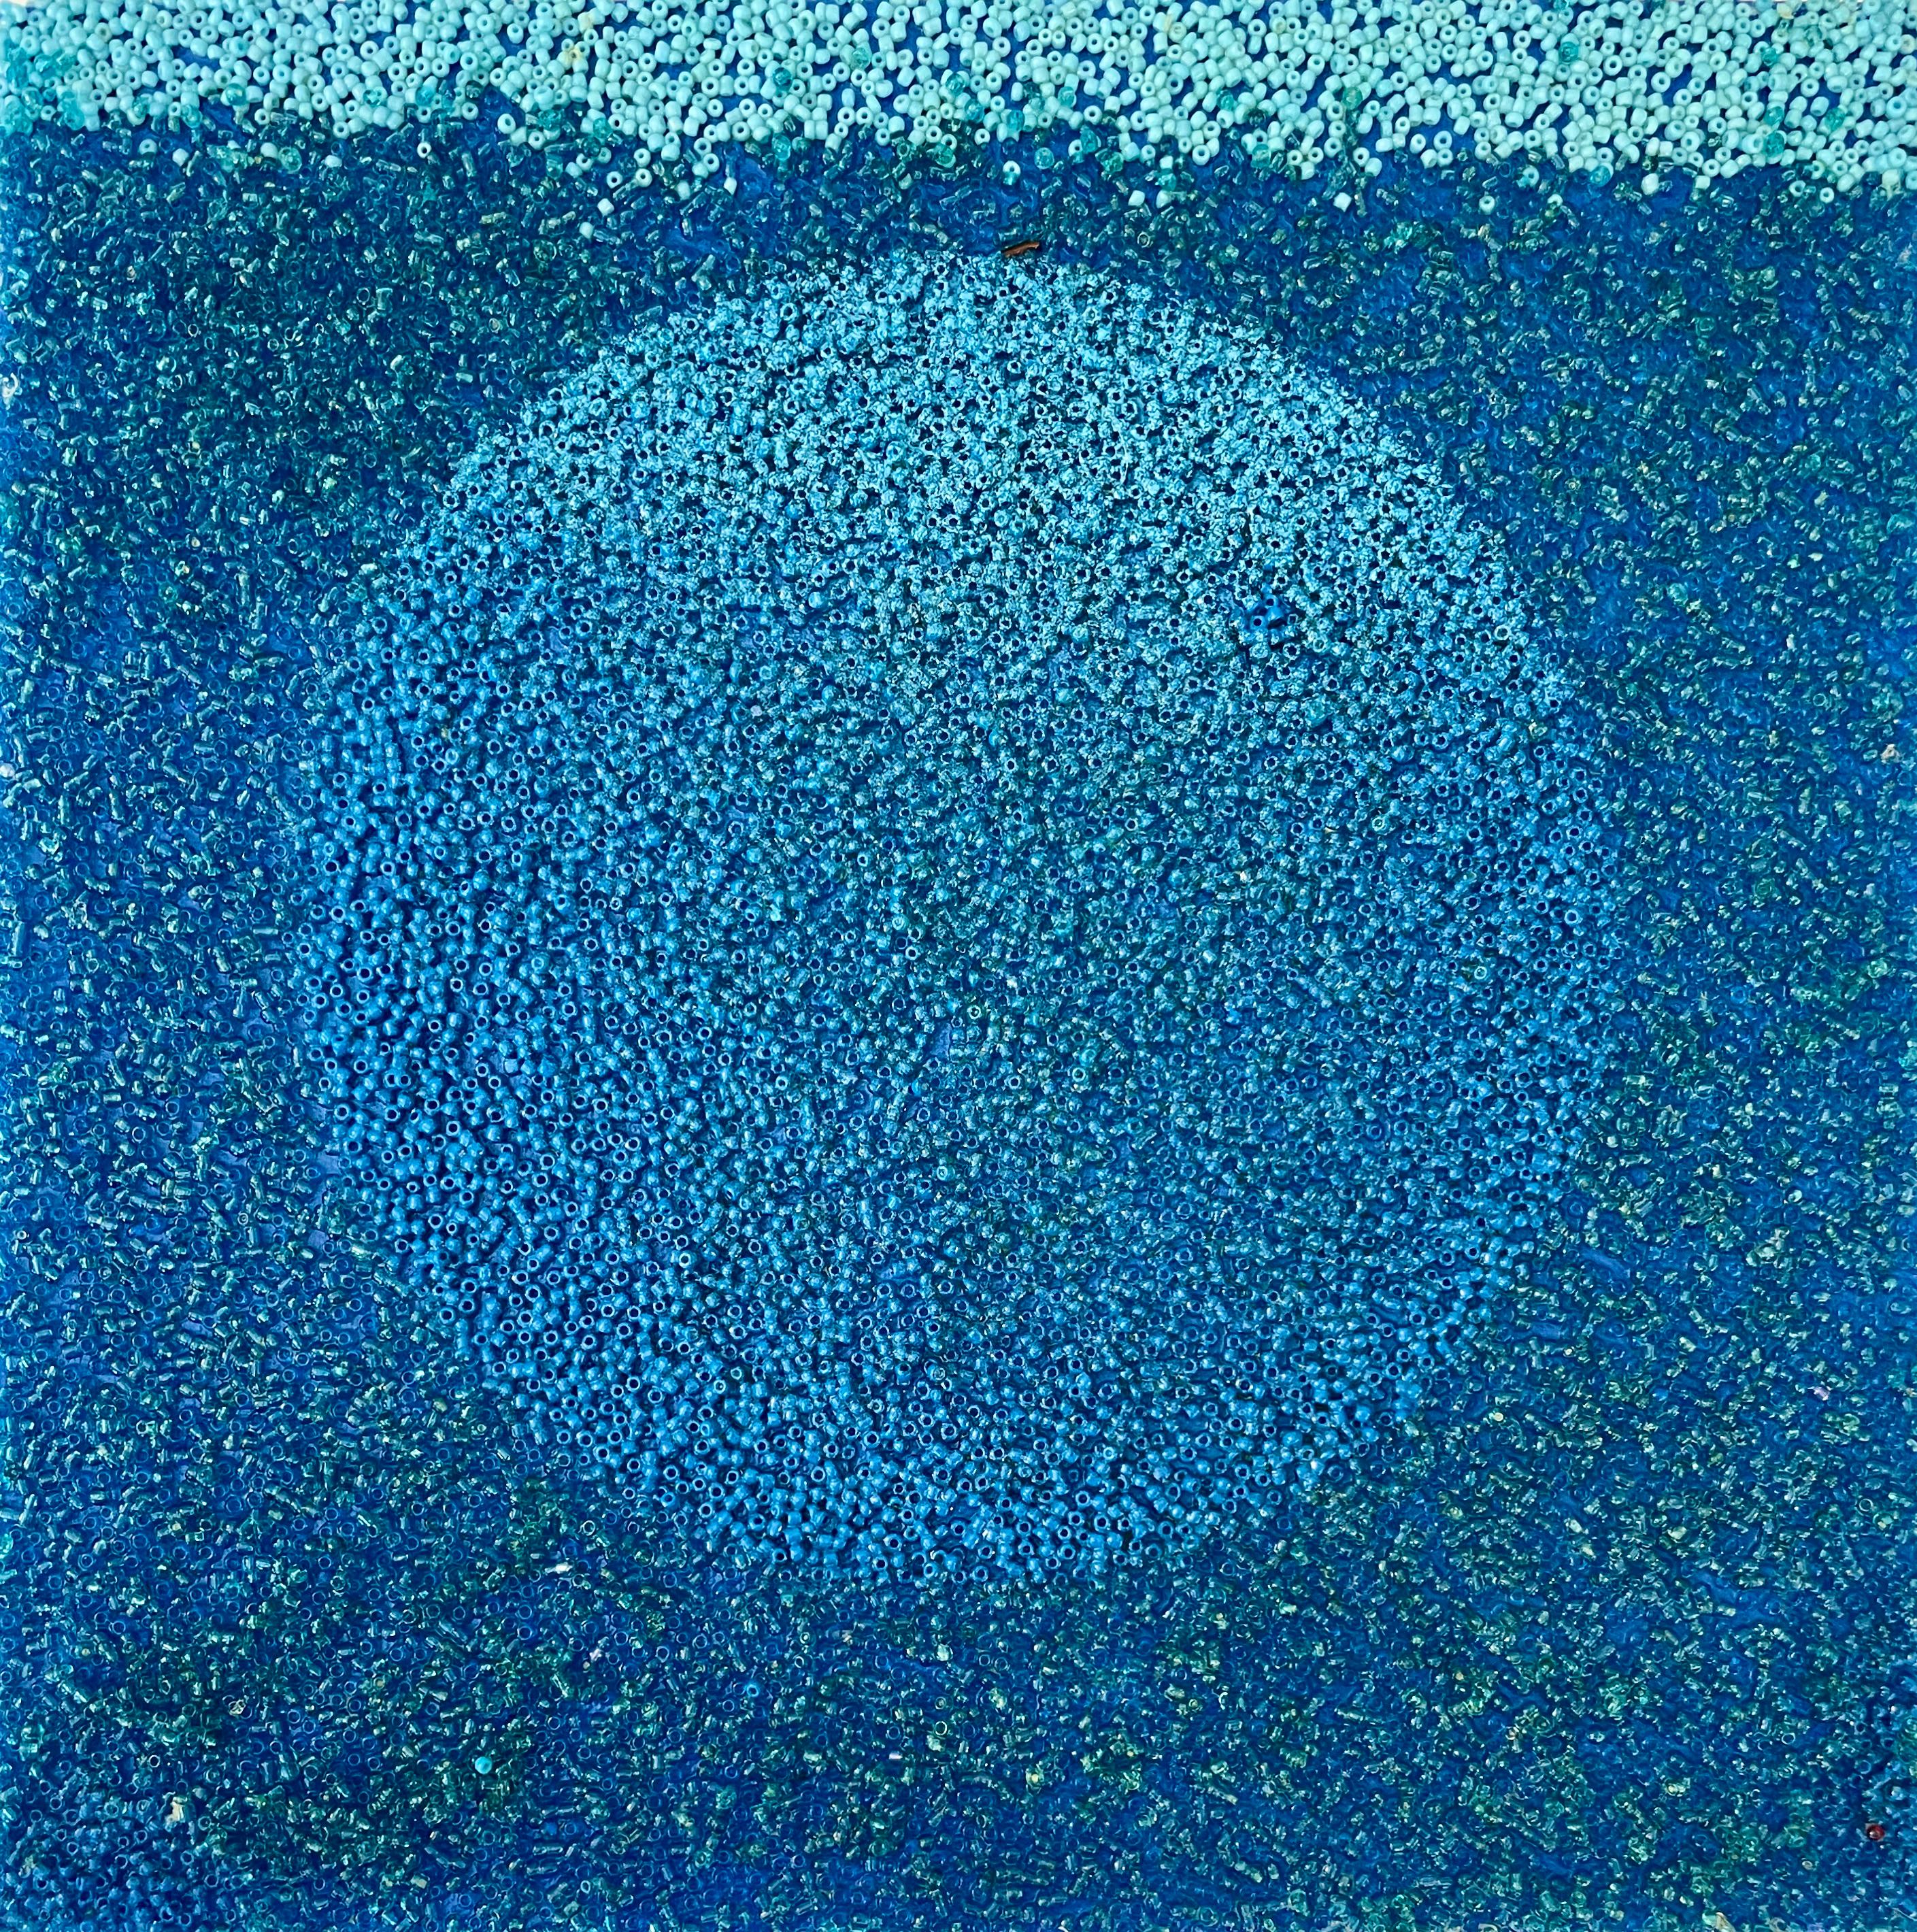 Tantra in Blue n°12 : sculpture/peinture abstraite minimaliste avec cercles madala